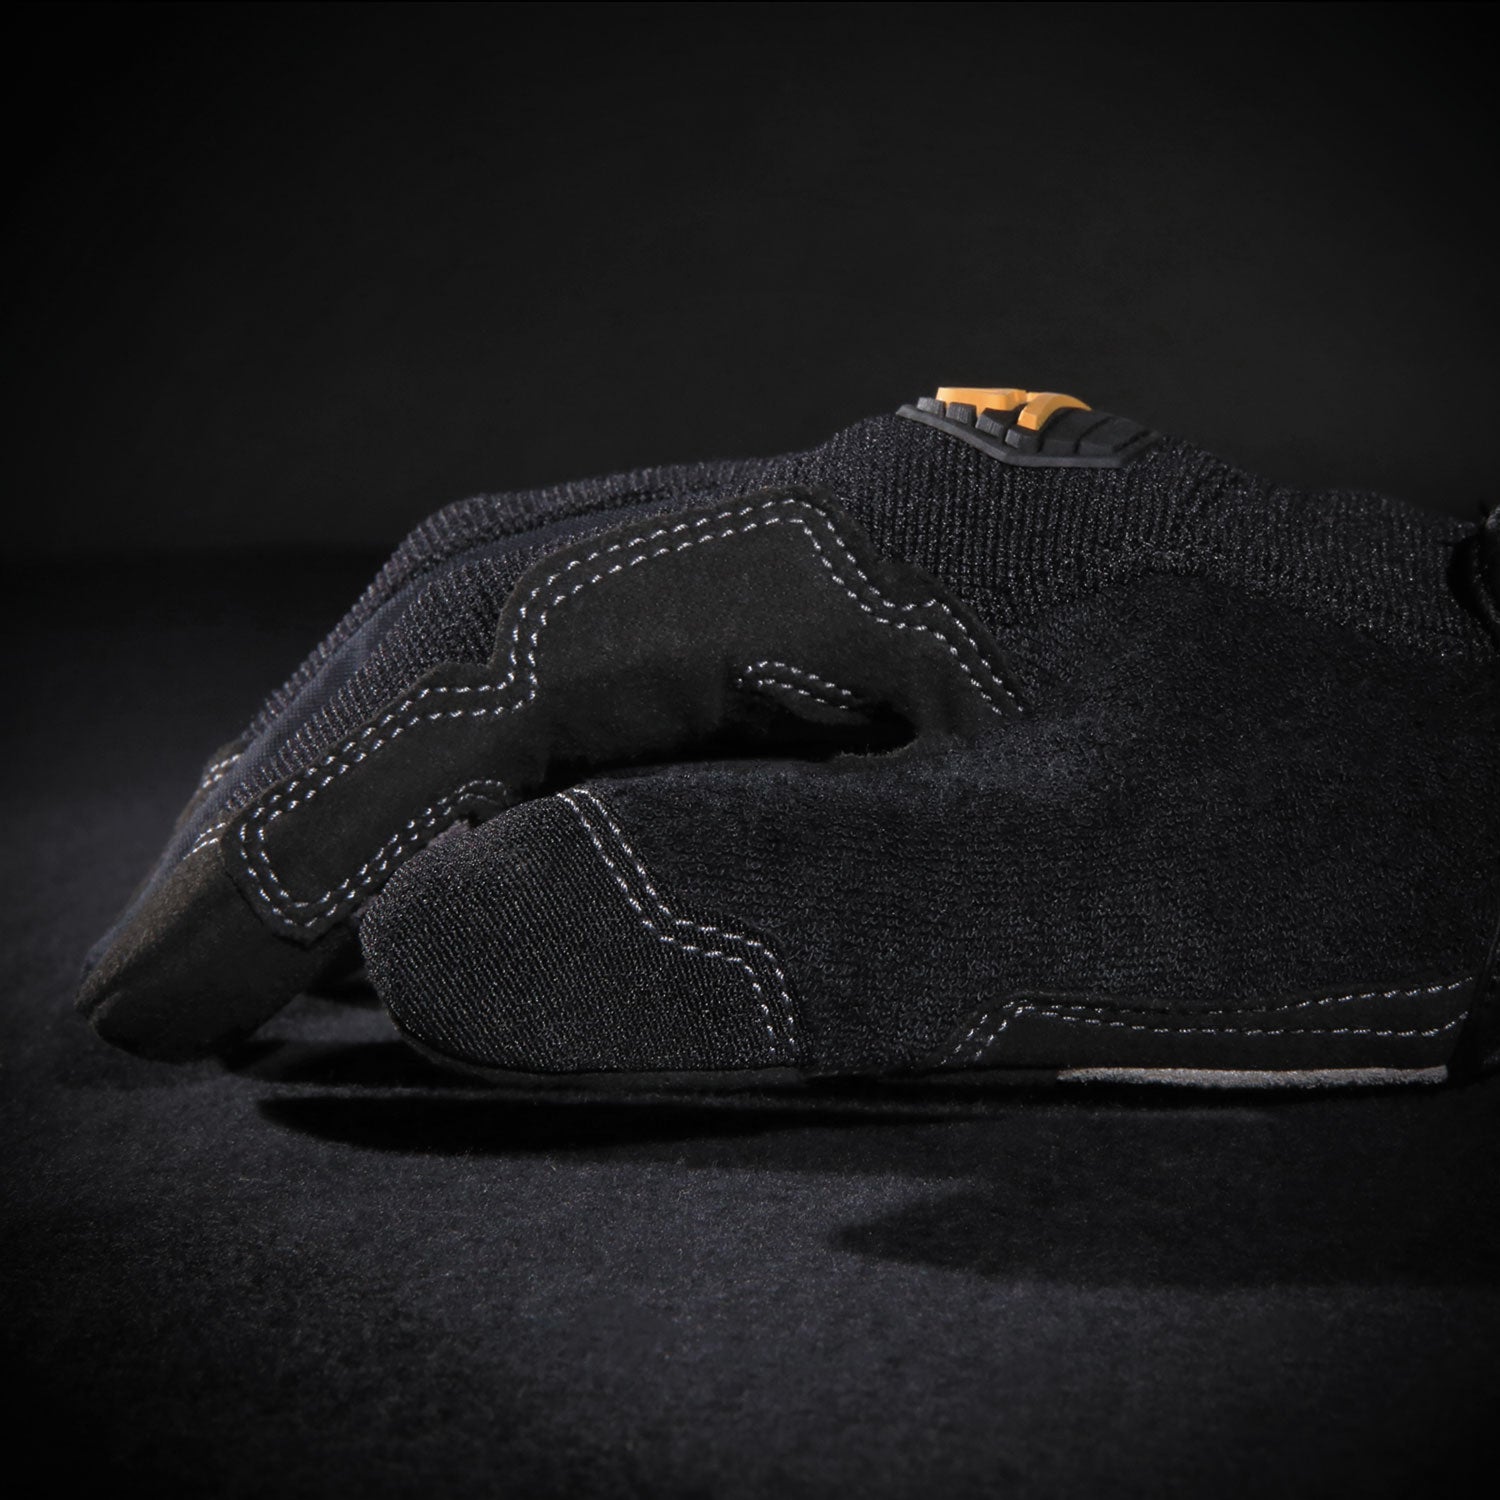 General Utility Spandex Gloves, Black, Medium, Pair - 